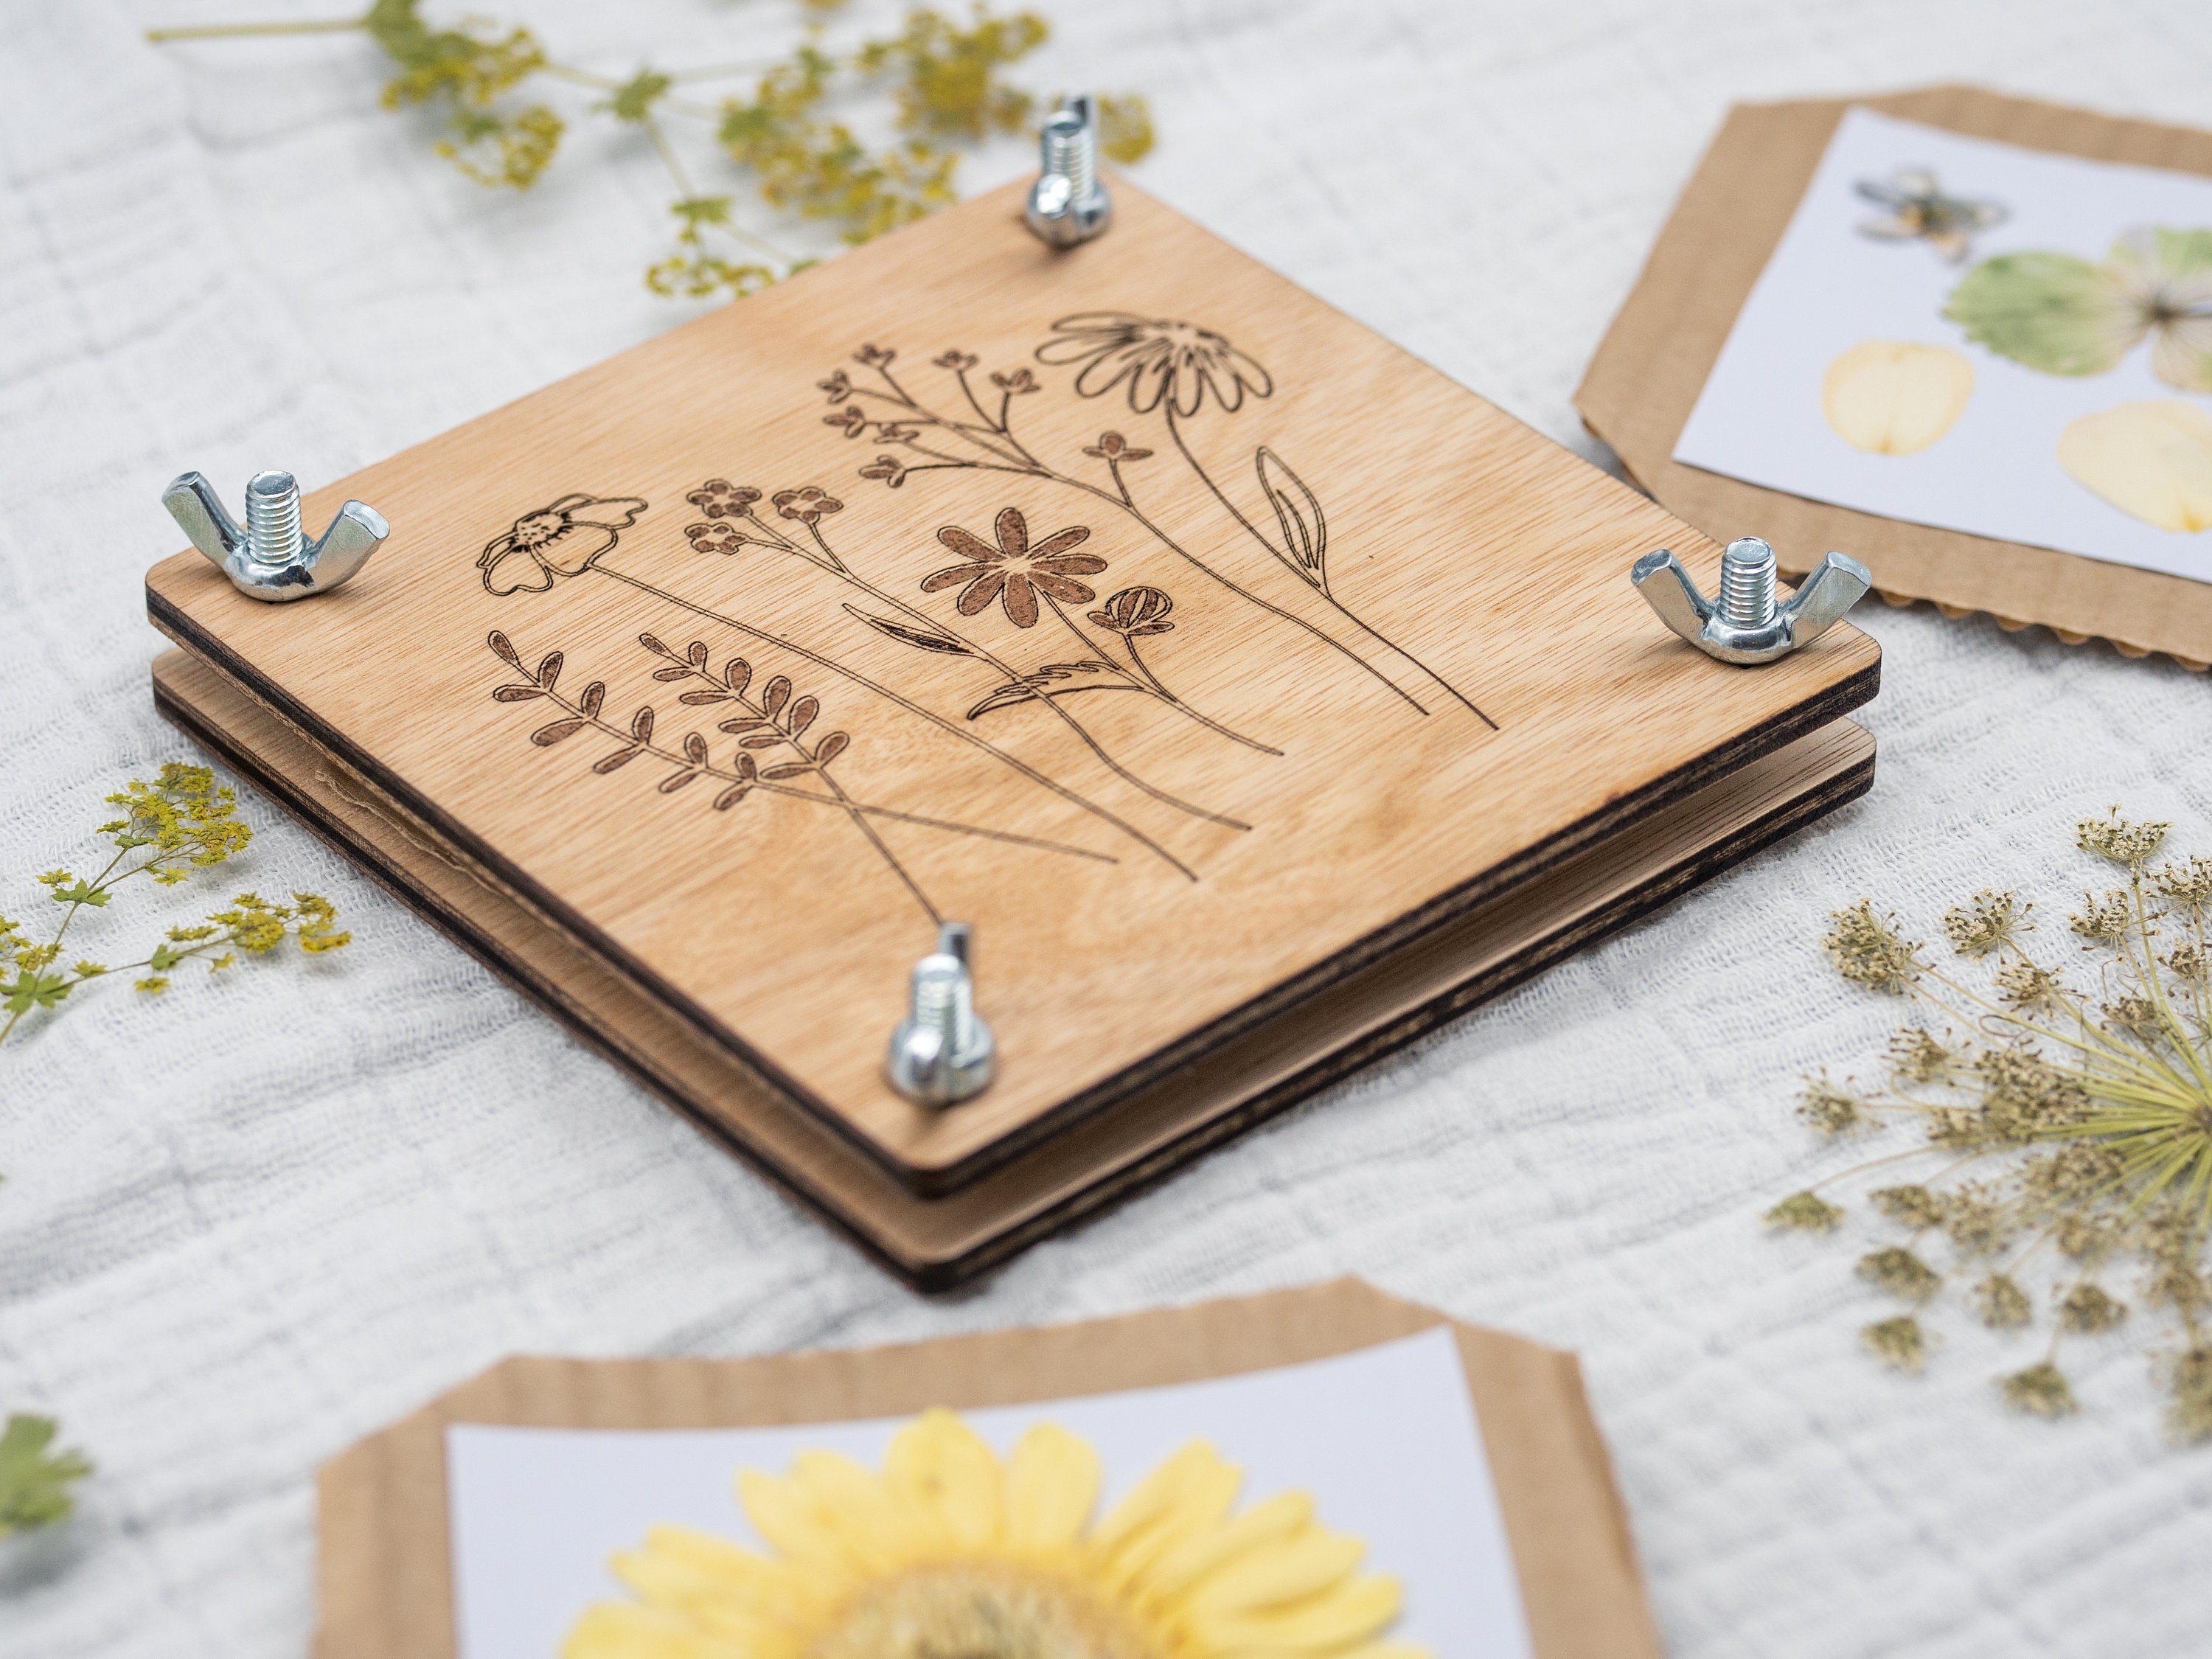 Flower Plants Press Kit, Flower Press, Personalized Nature Lovers Gift  Idea, Kids Craft Flower Press, Herb Press Scrapbook Album 